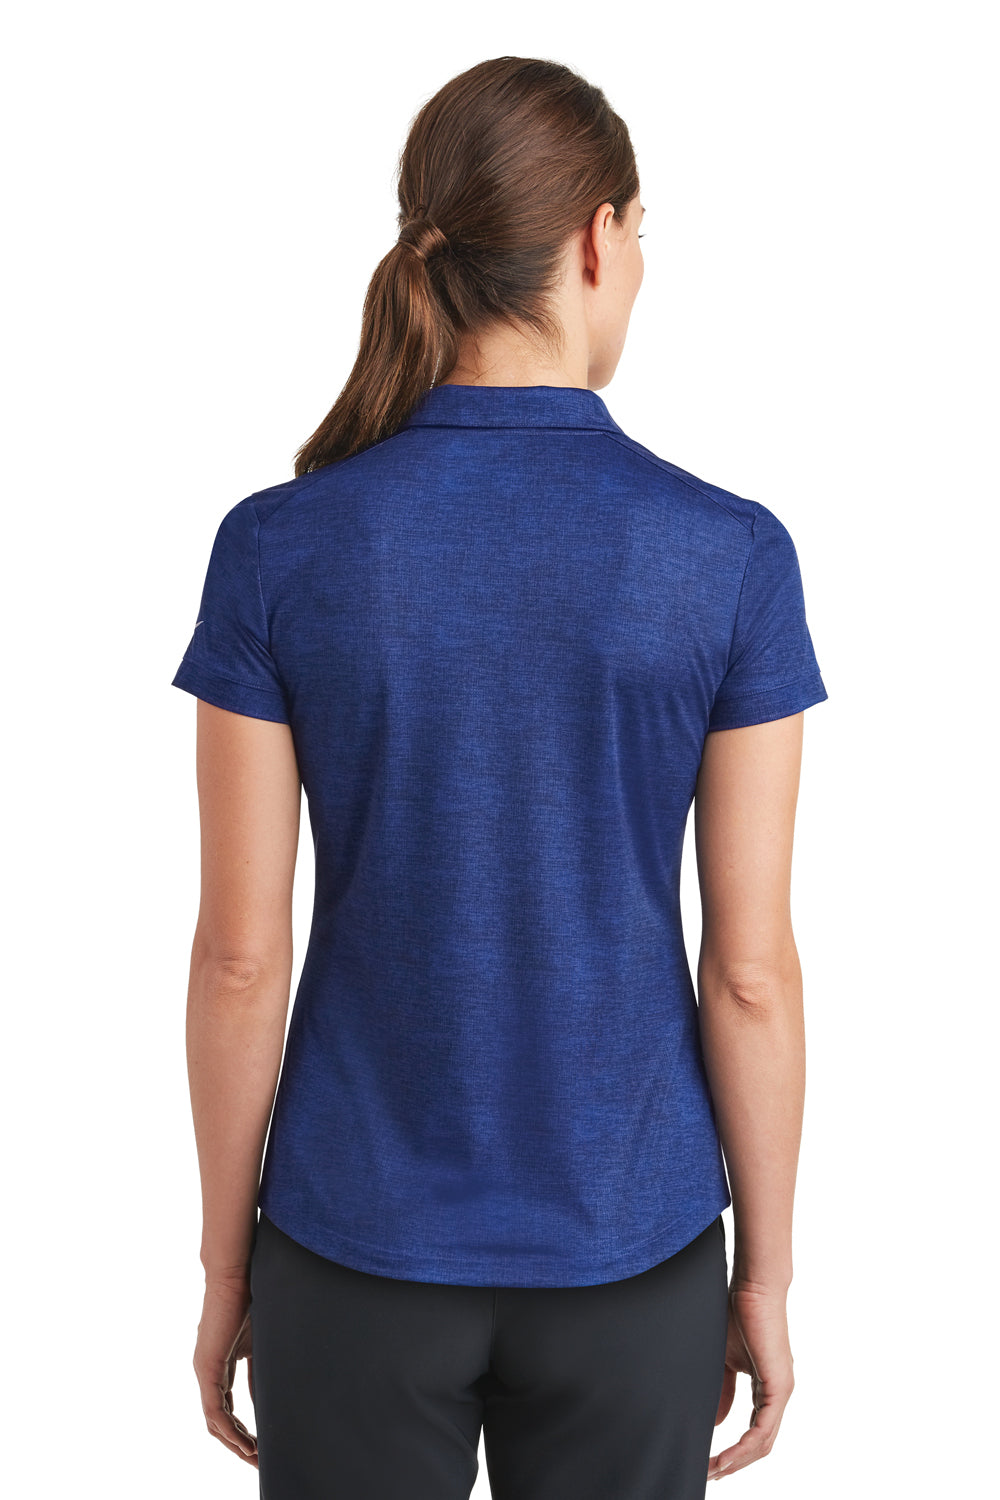 Nike 838961 Womens Dri-Fit Moisture Wicking Short Sleeve Polo Shirt Old Royal Blue Model Back